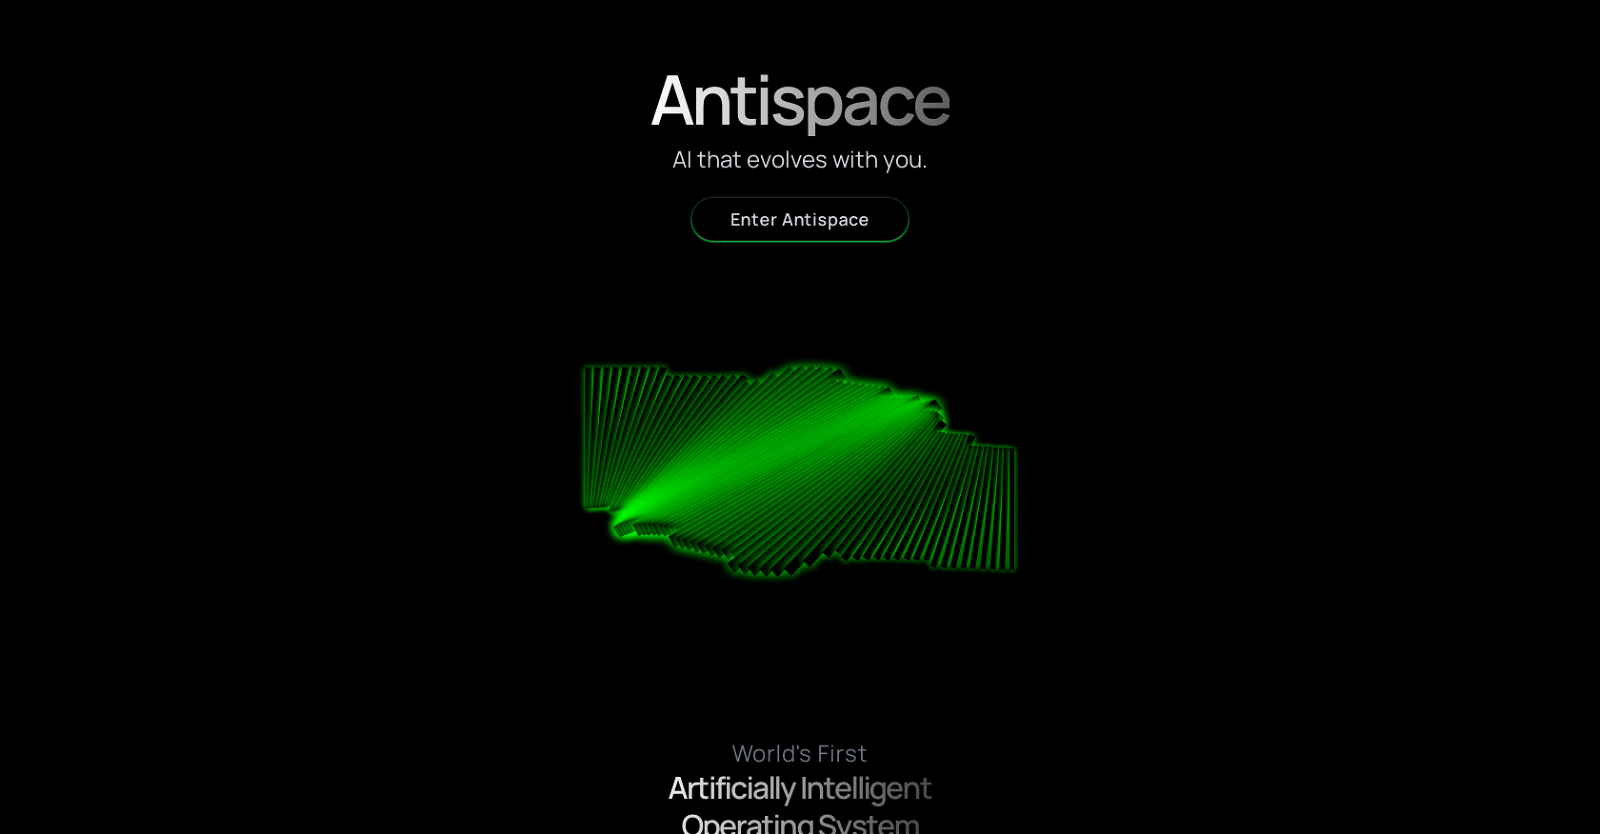 Antispace website